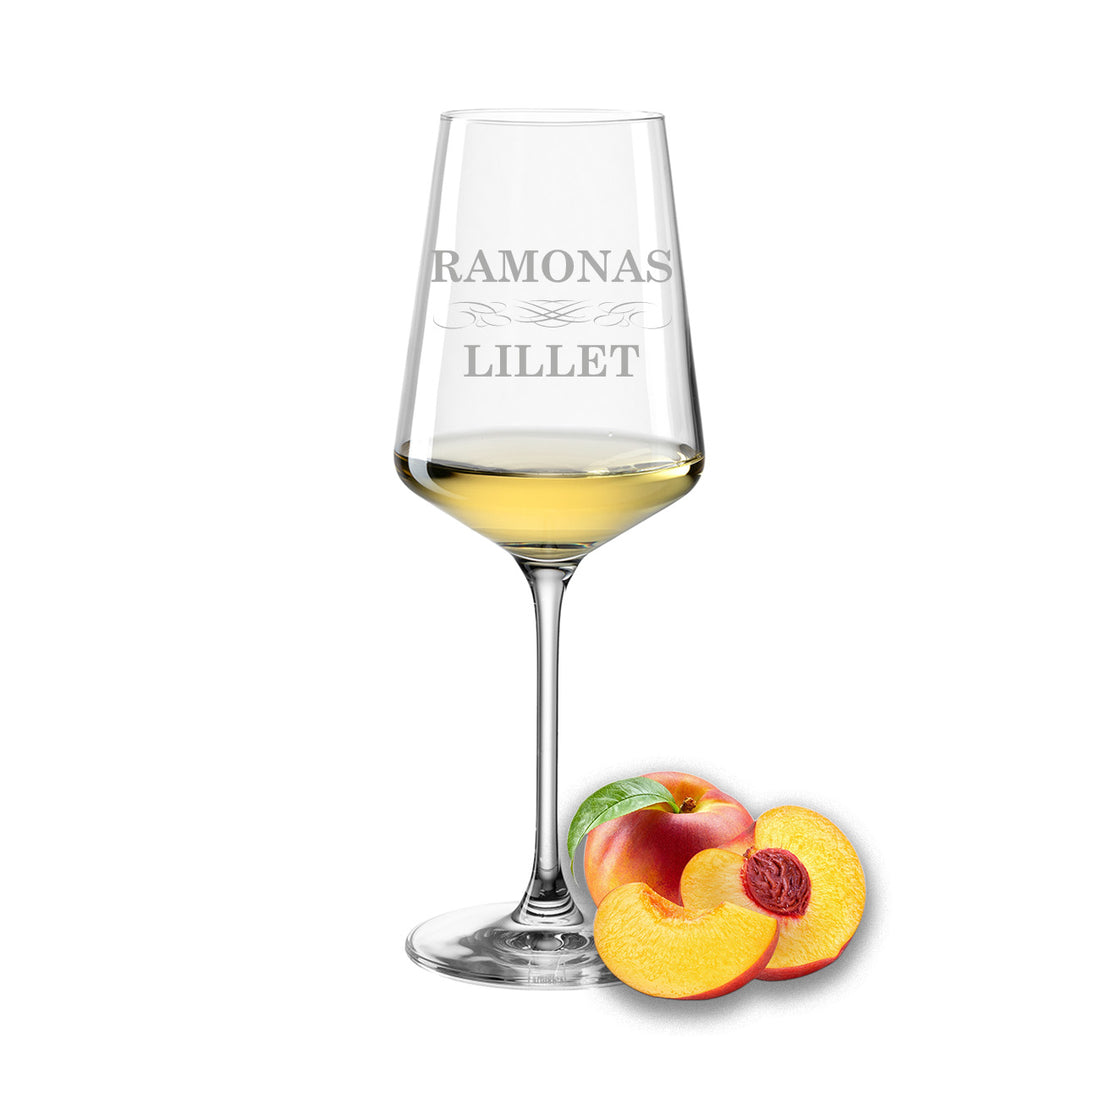 Weinglas mit Gravur Leonardo Puccini "LILLET" mit Wunschname